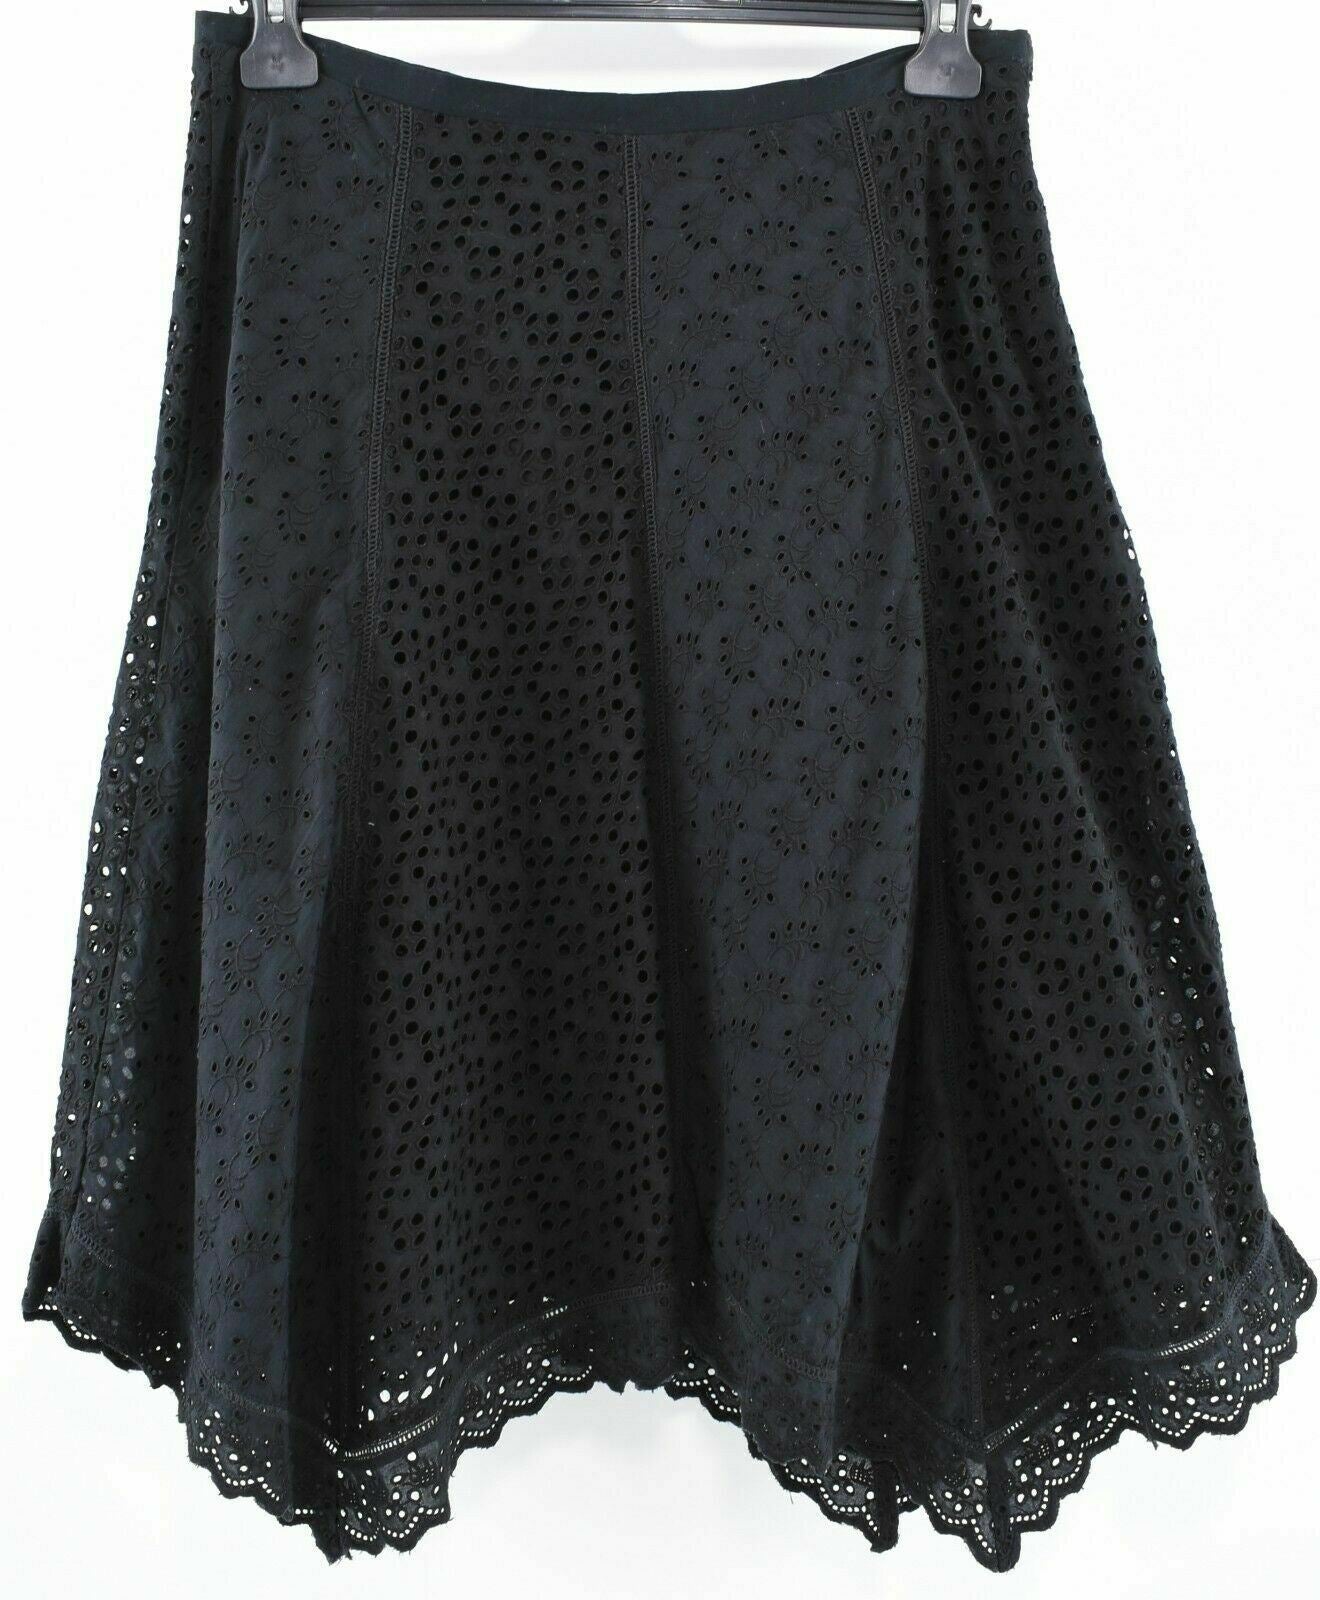 LAUREN RALPH LAUREN Women's Embroidered A-Line Skirt, Black, size UK 10